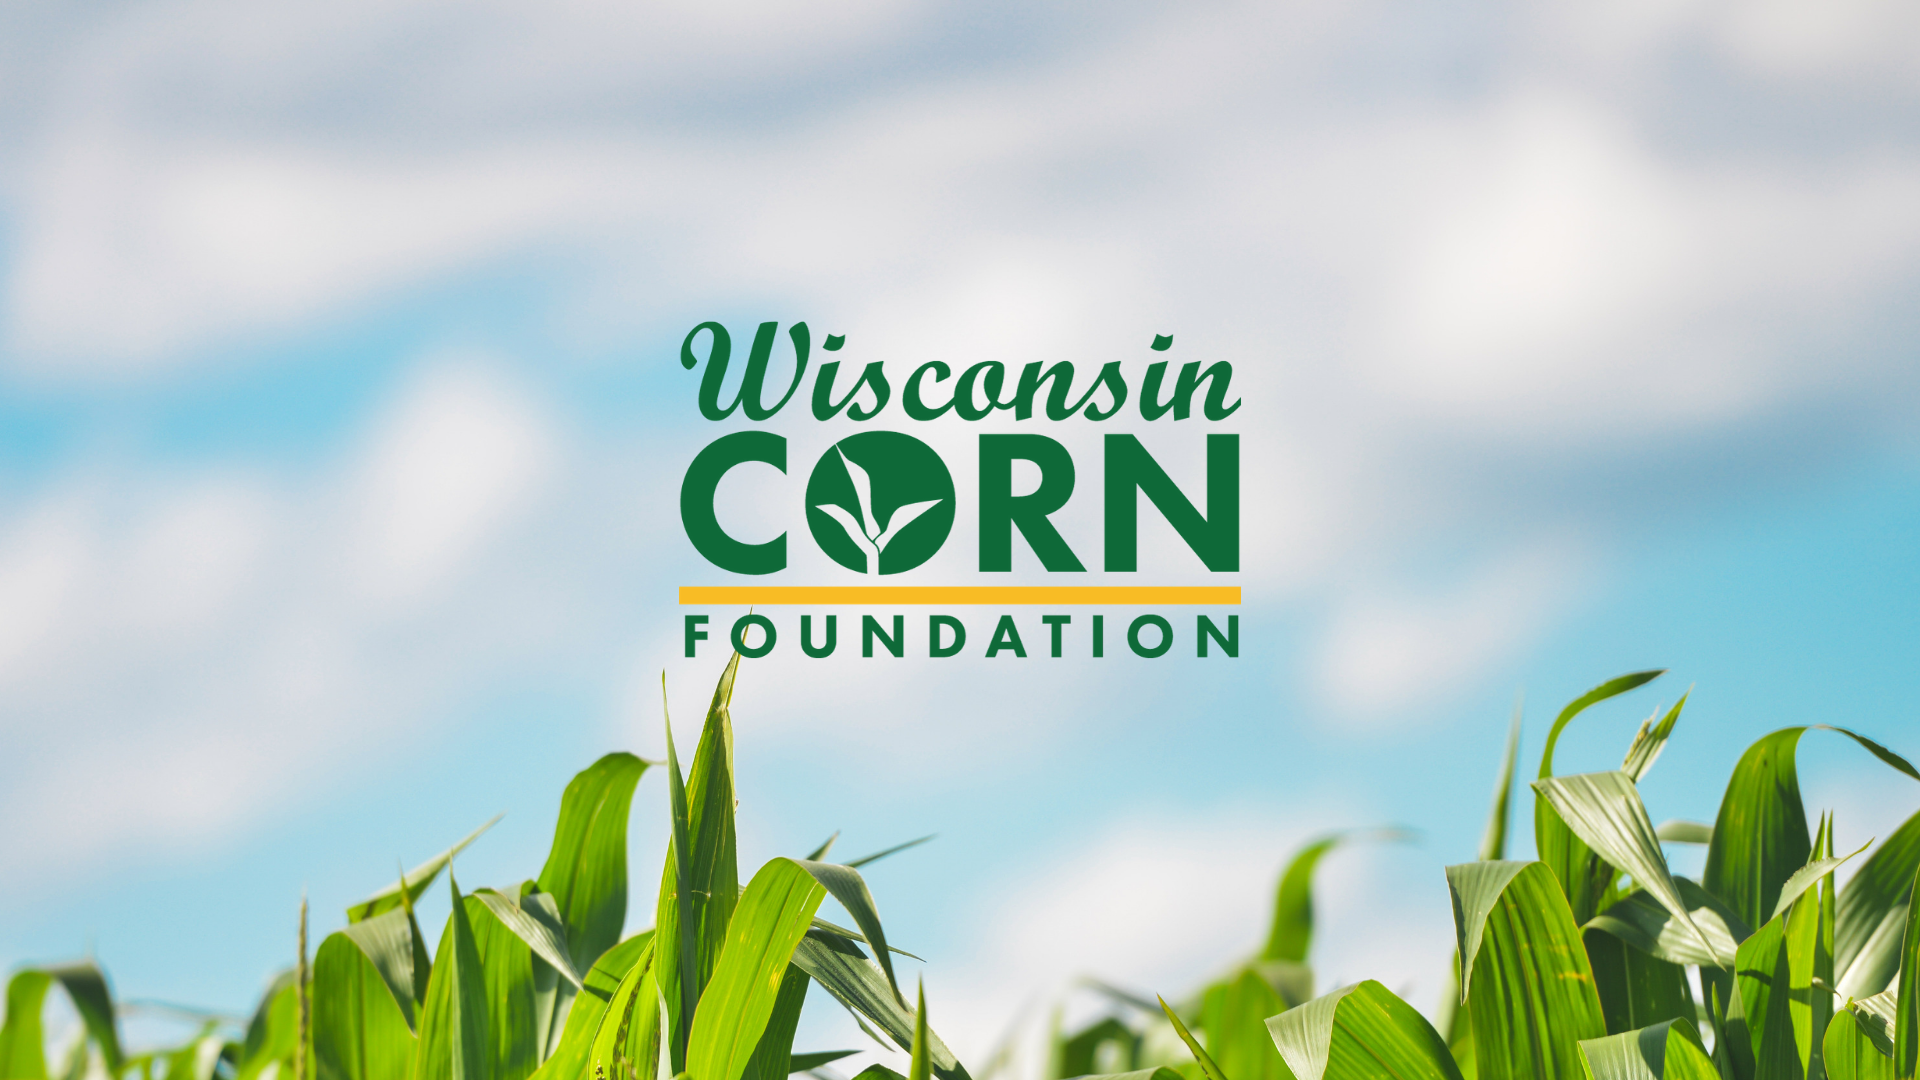 Wisconsin Corn program unveils Wisconsin Corn Foundation, Inc.